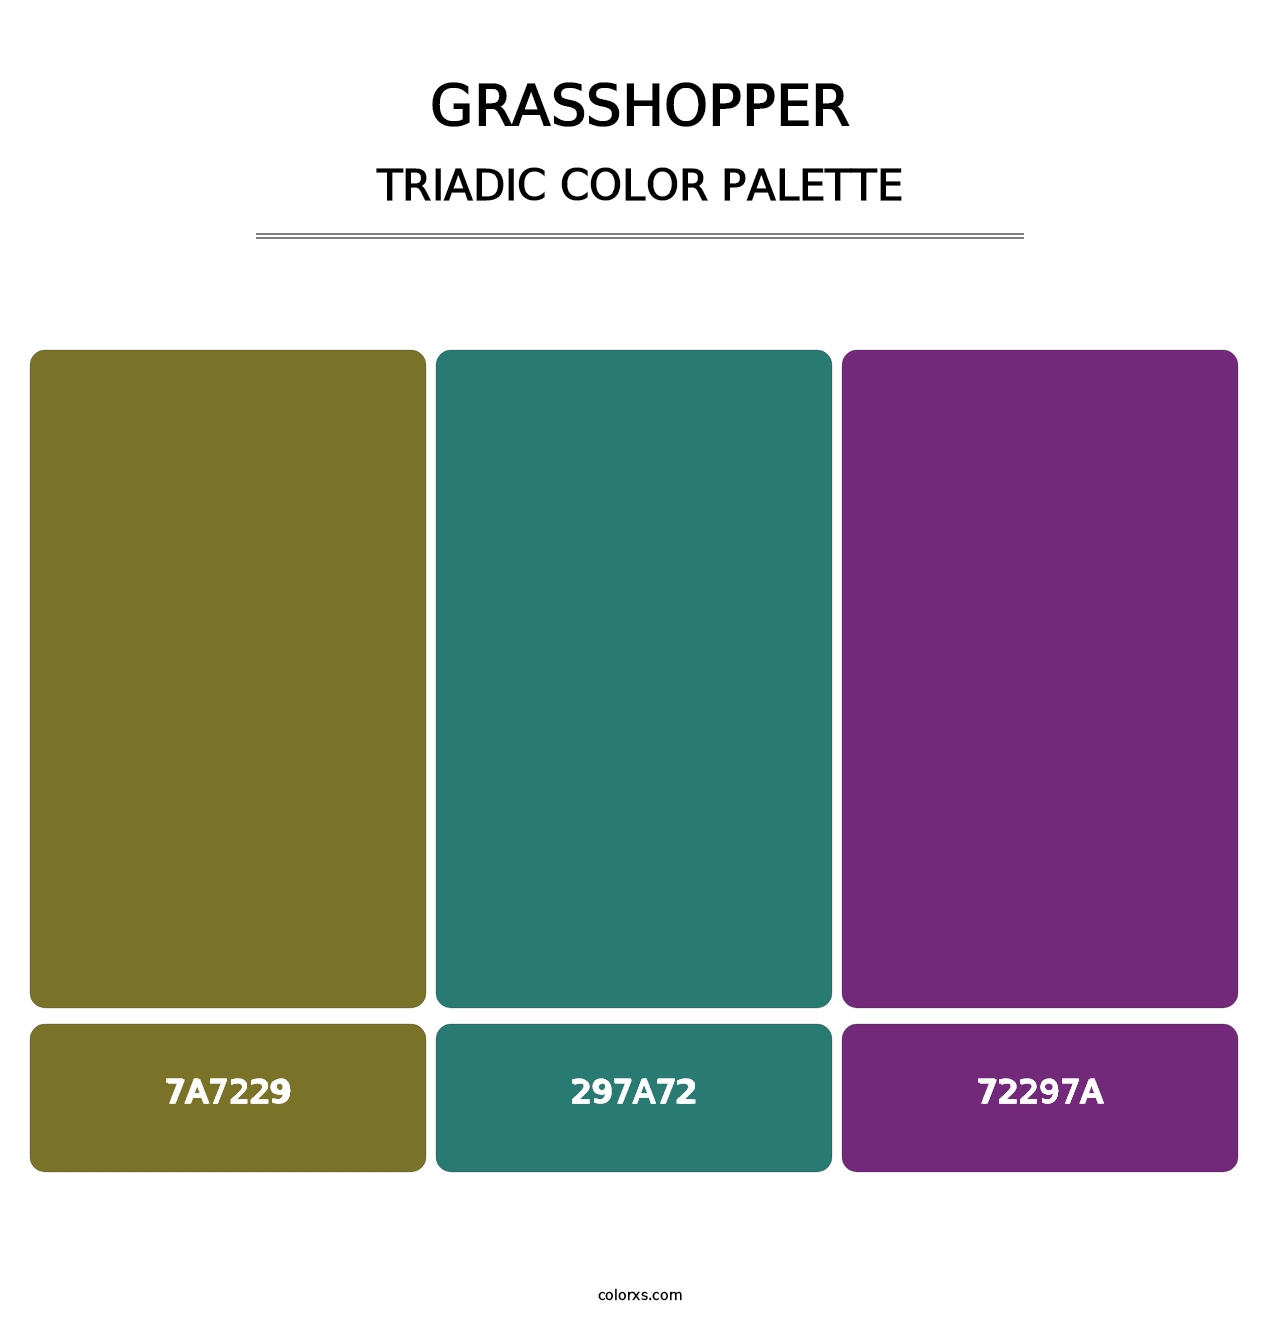 Grasshopper - Triadic Color Palette